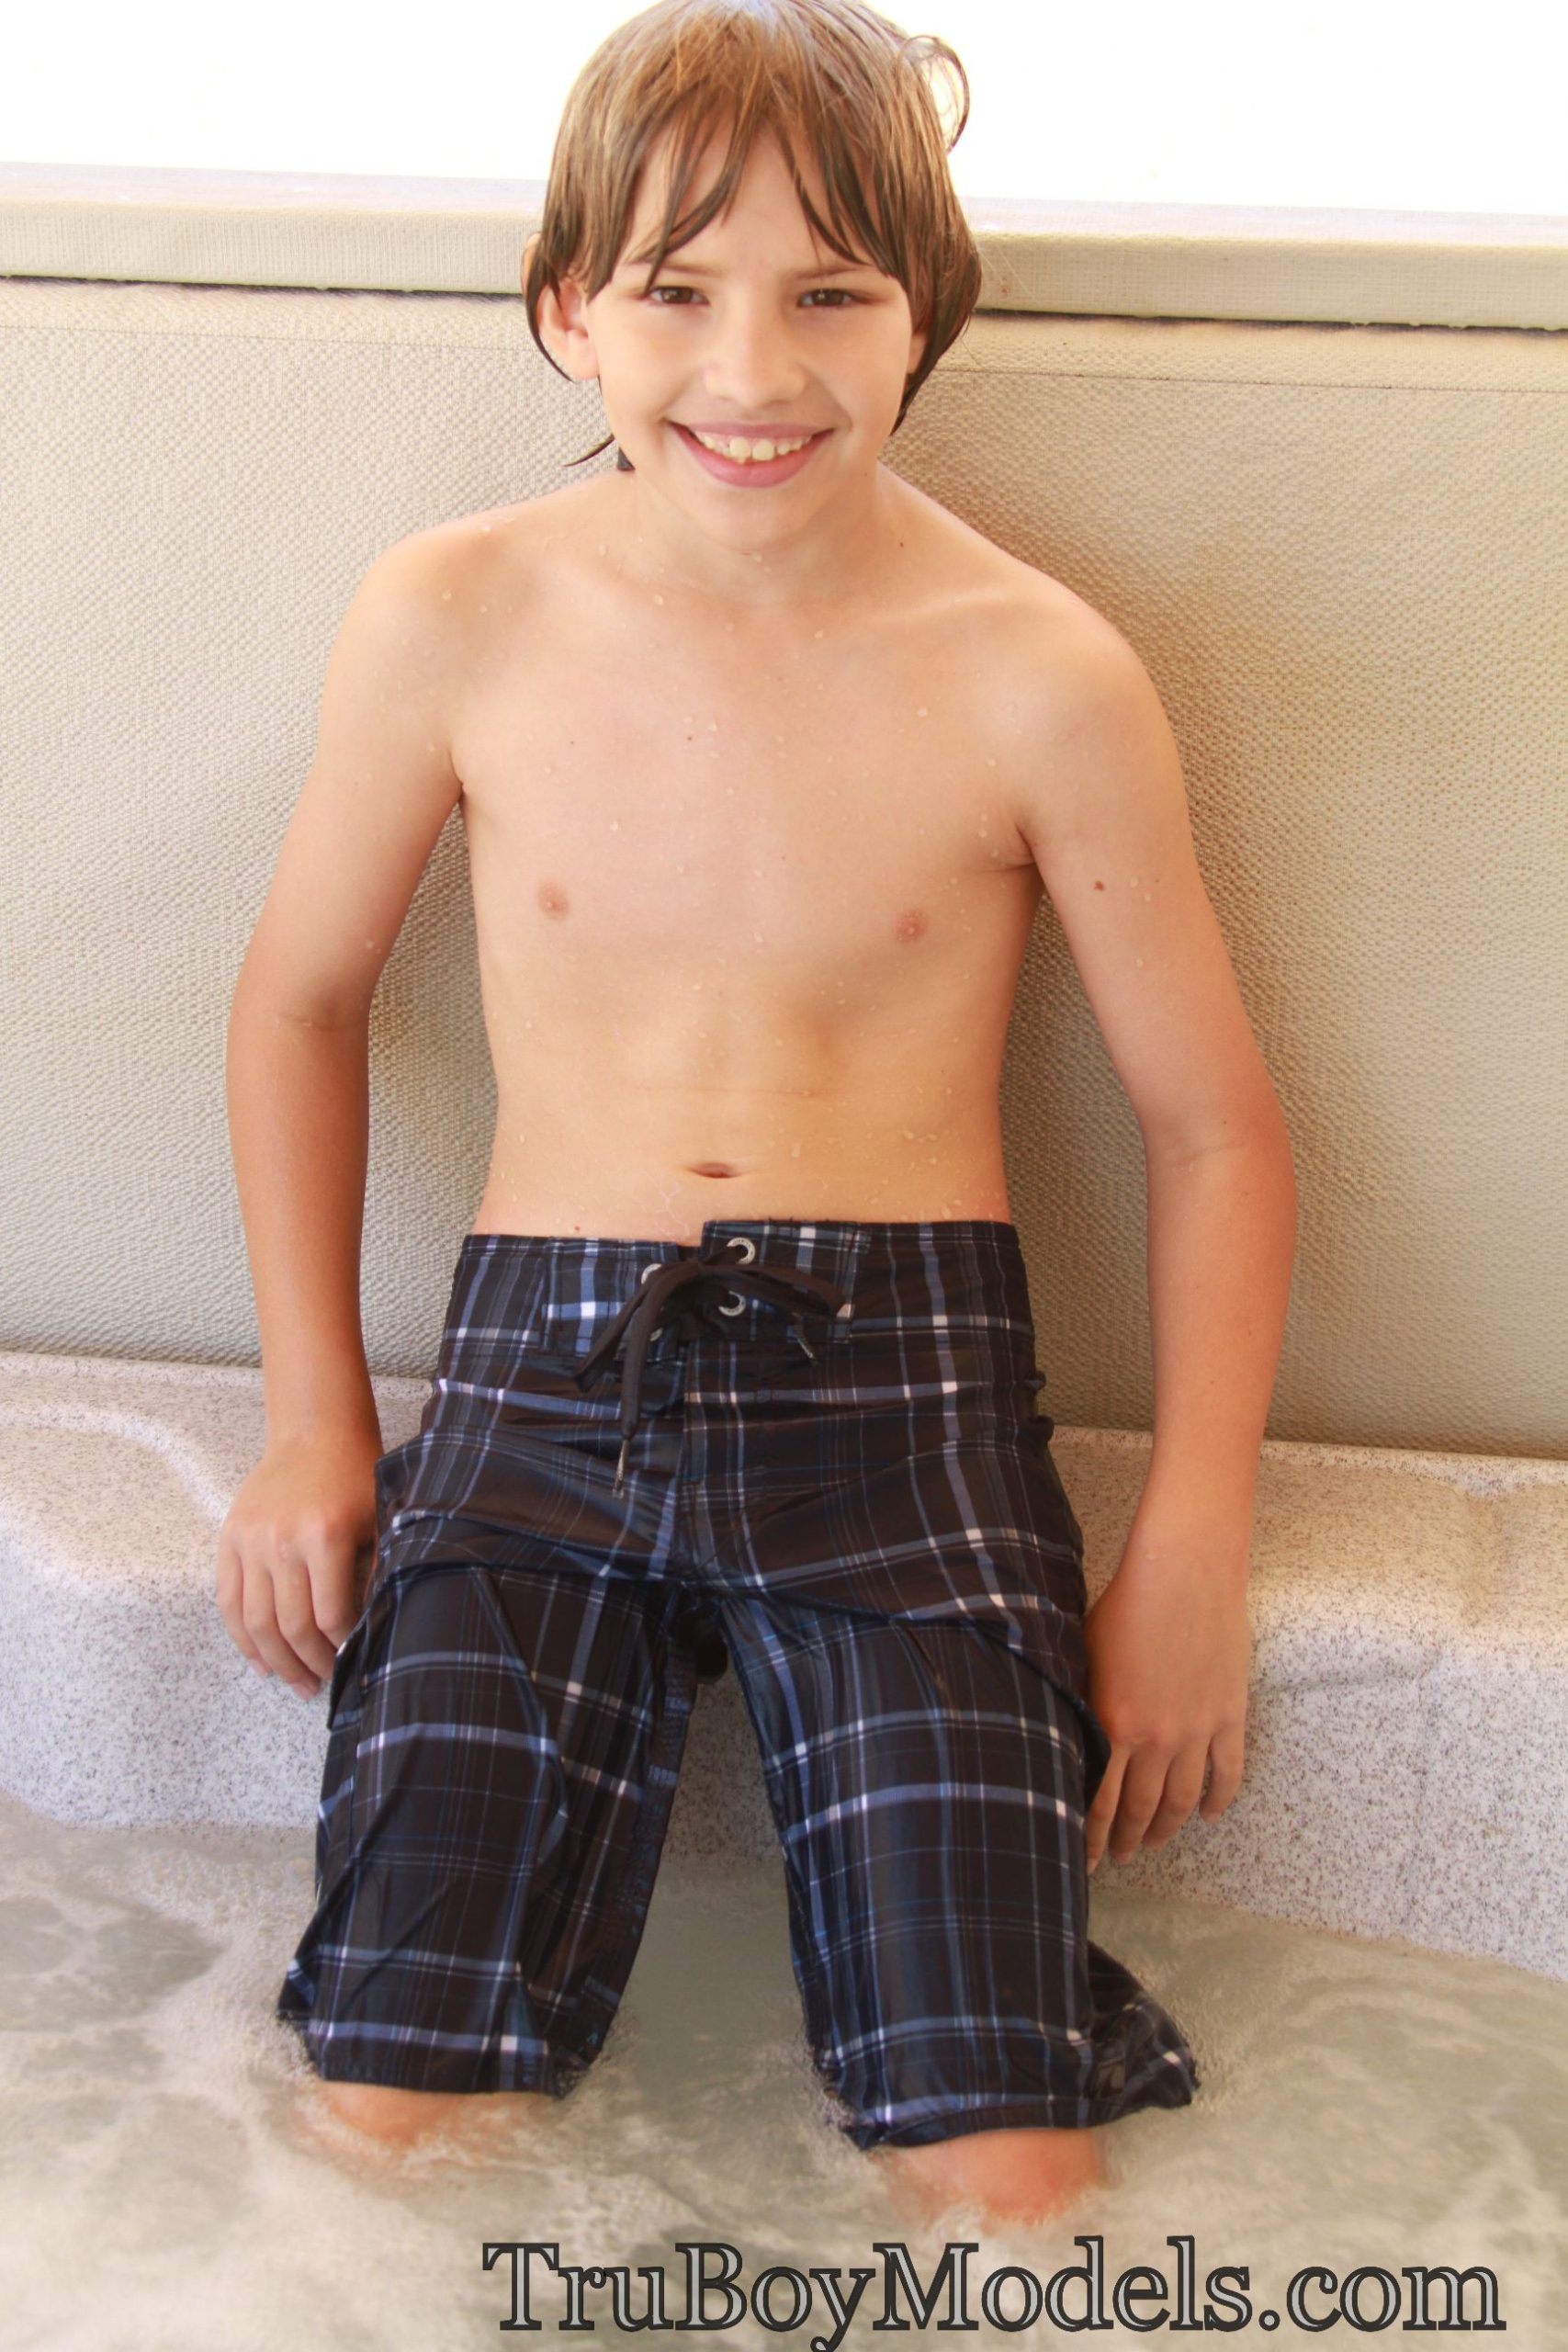 TBM Tristan Pool and Hot Tub Photos - Face Boy